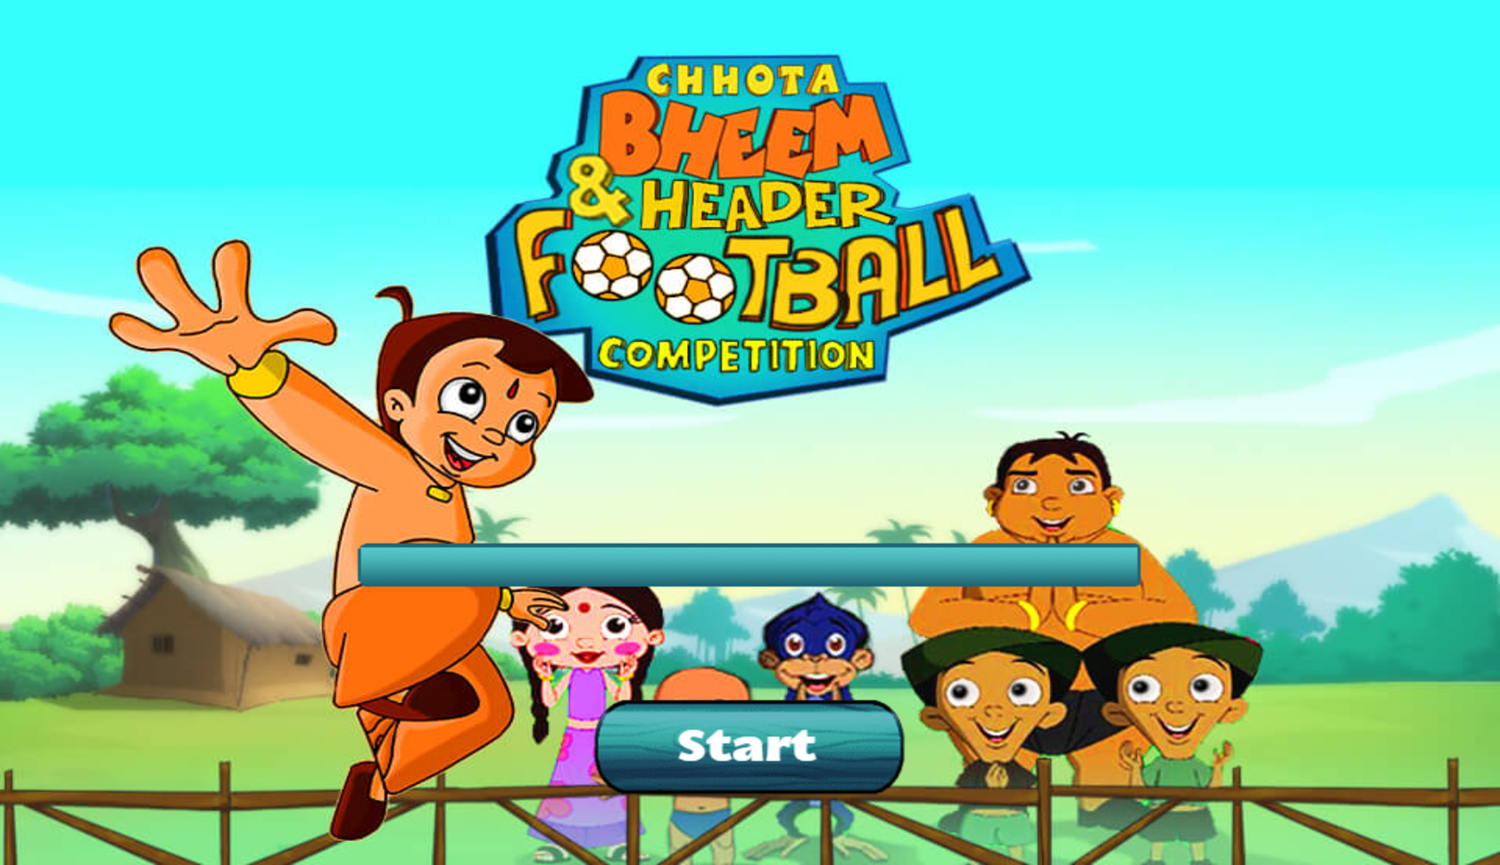 Chhota Bheem and Header Football Competition Game Welcome Screen Screenshot.